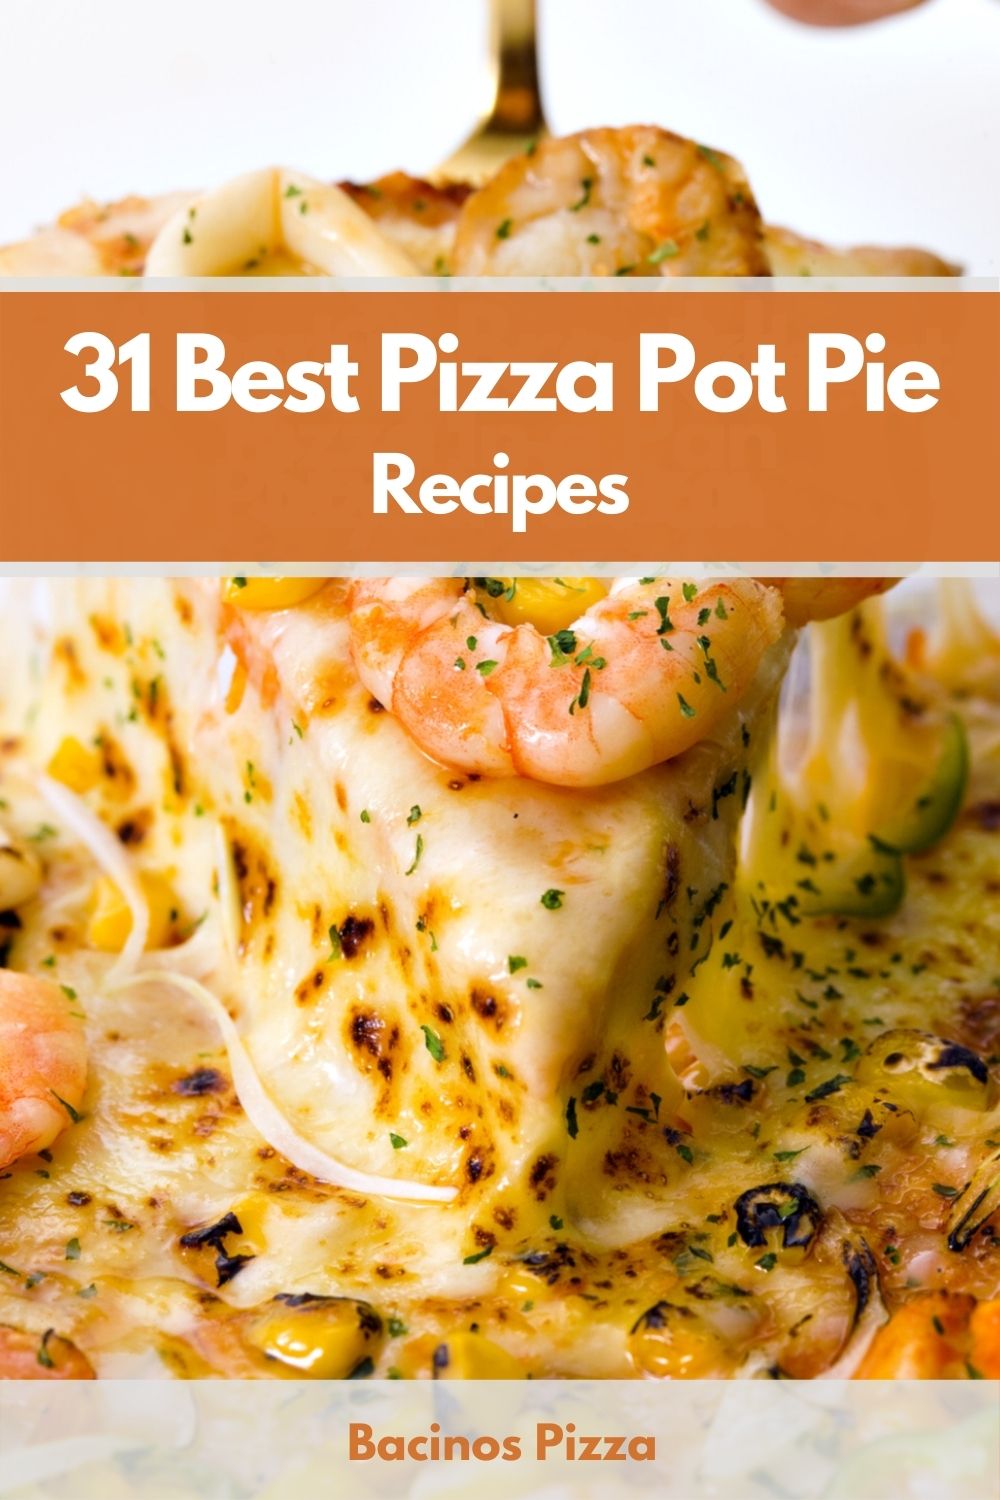 31 Best Pizza Pot Pie Recipes pin